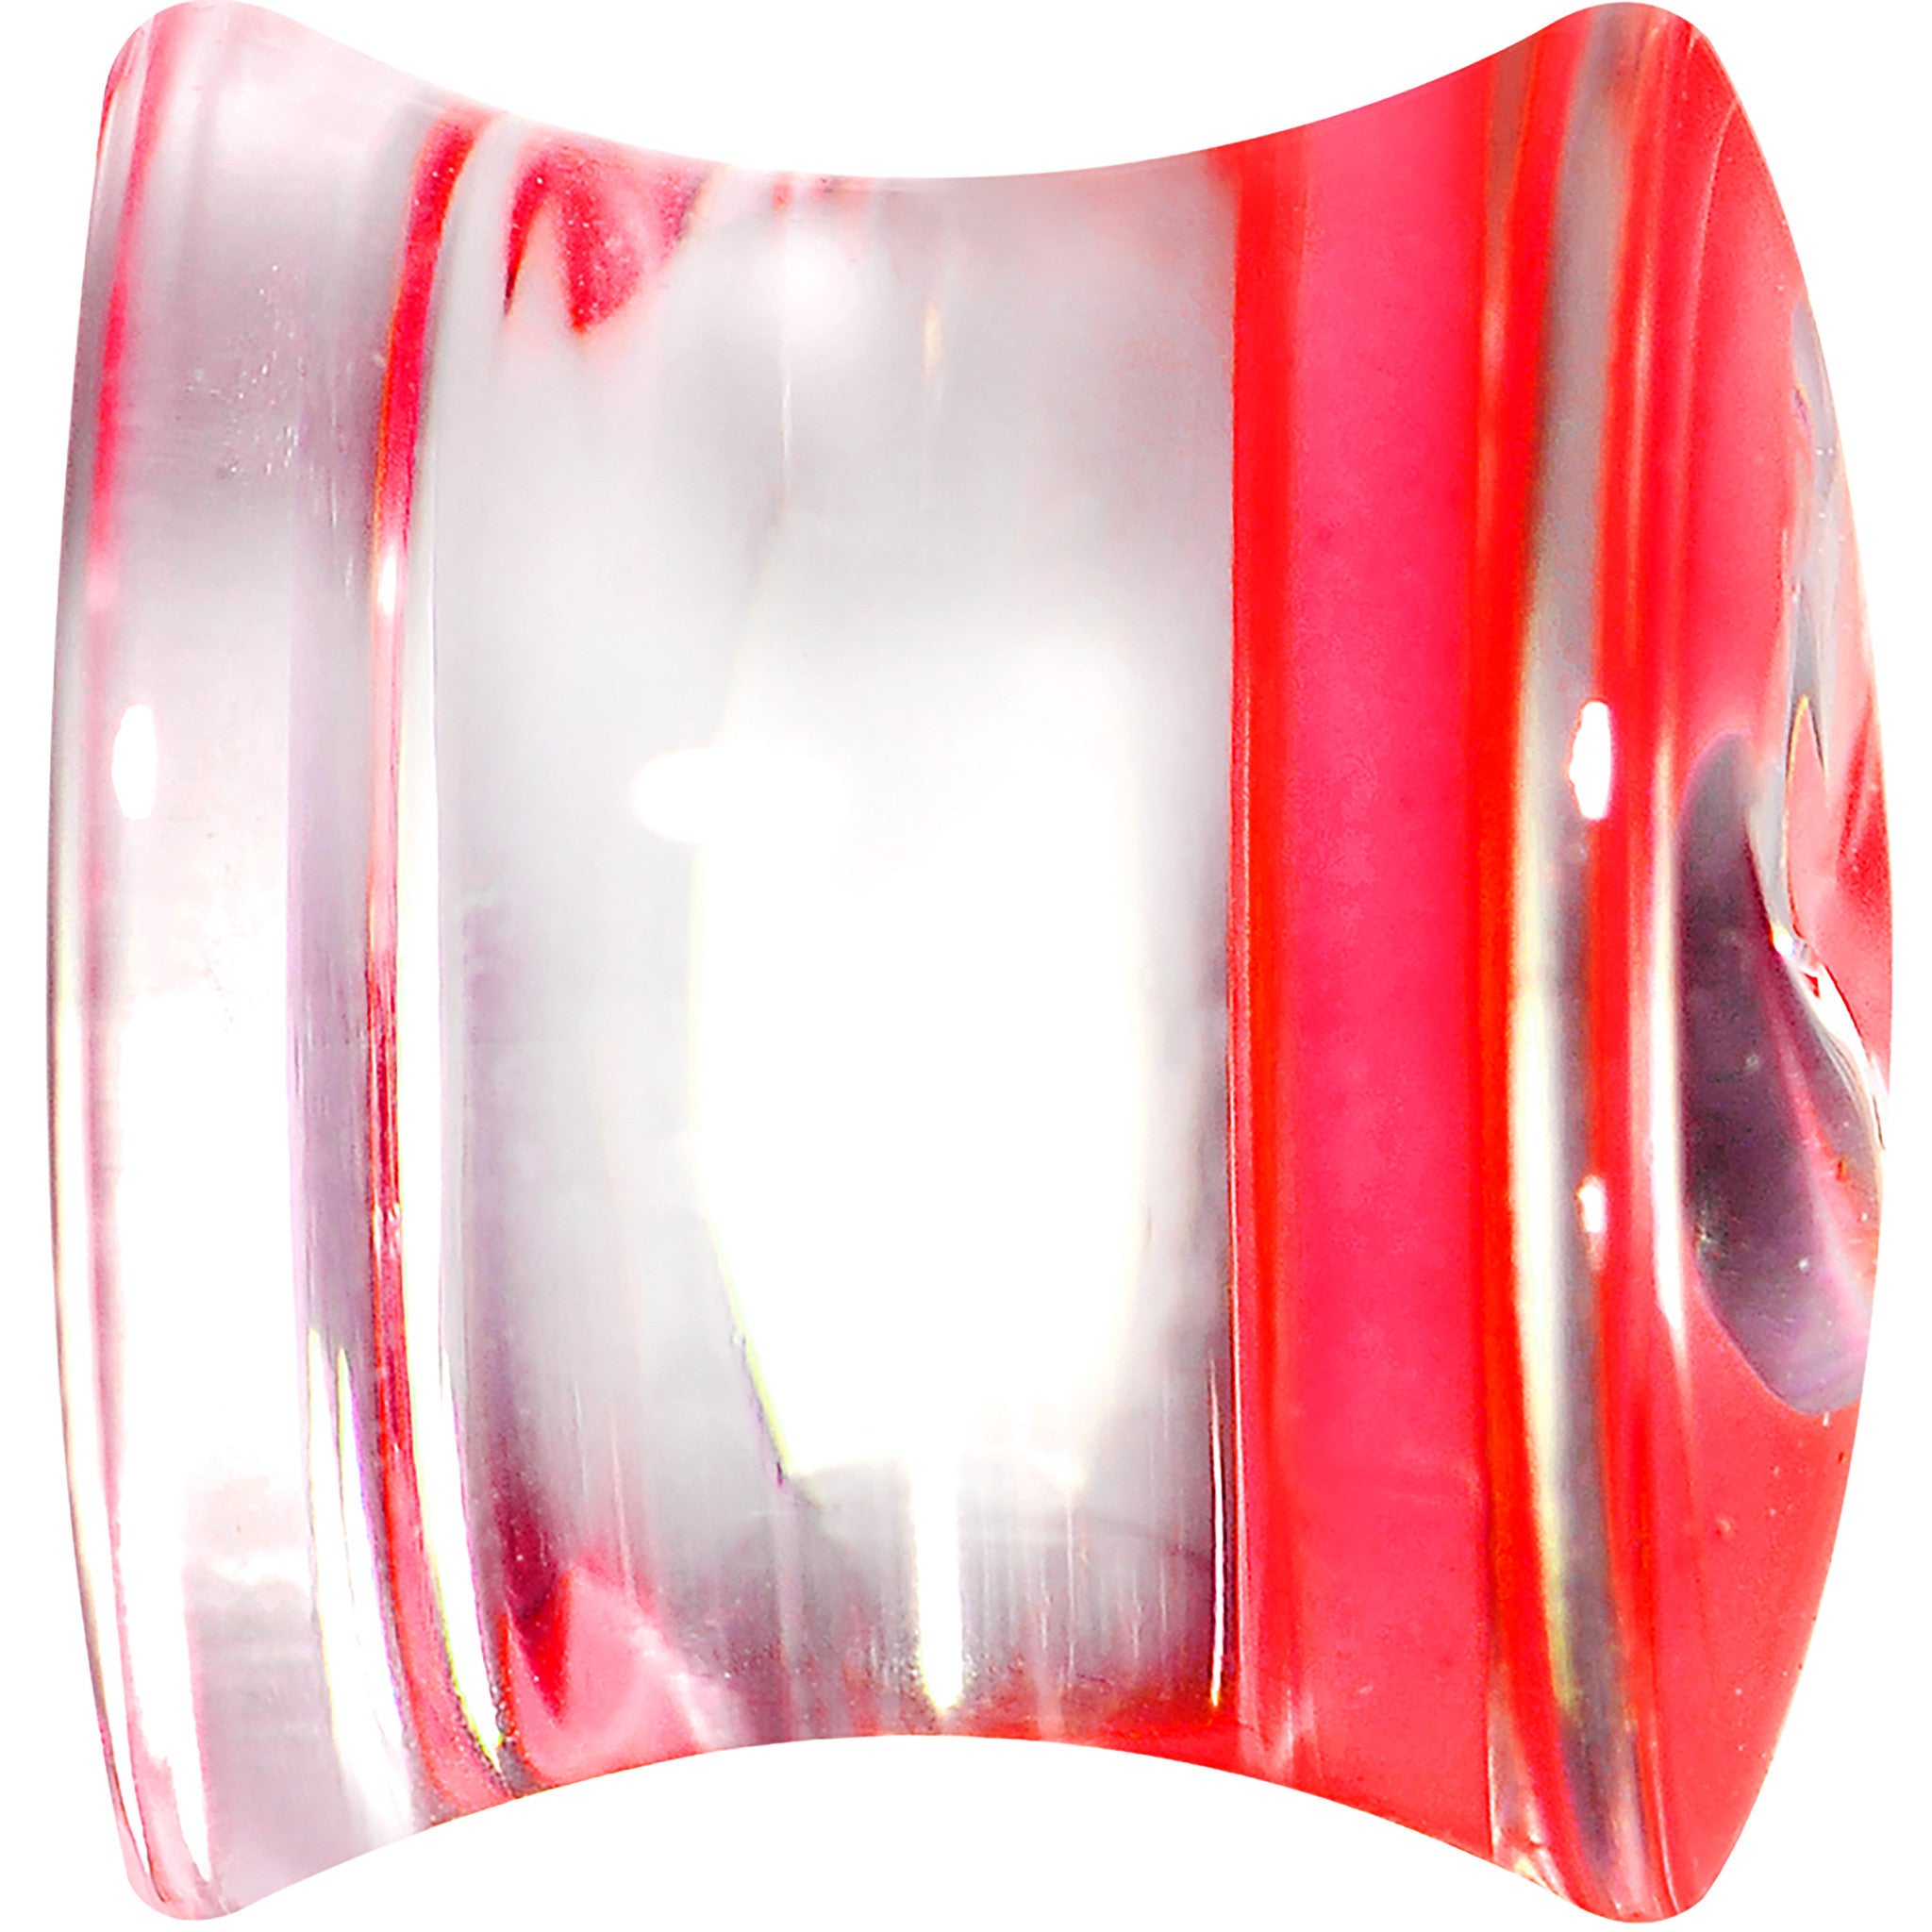 1/2 Clear Red Acrylic Adoring Heart Saddle Plug